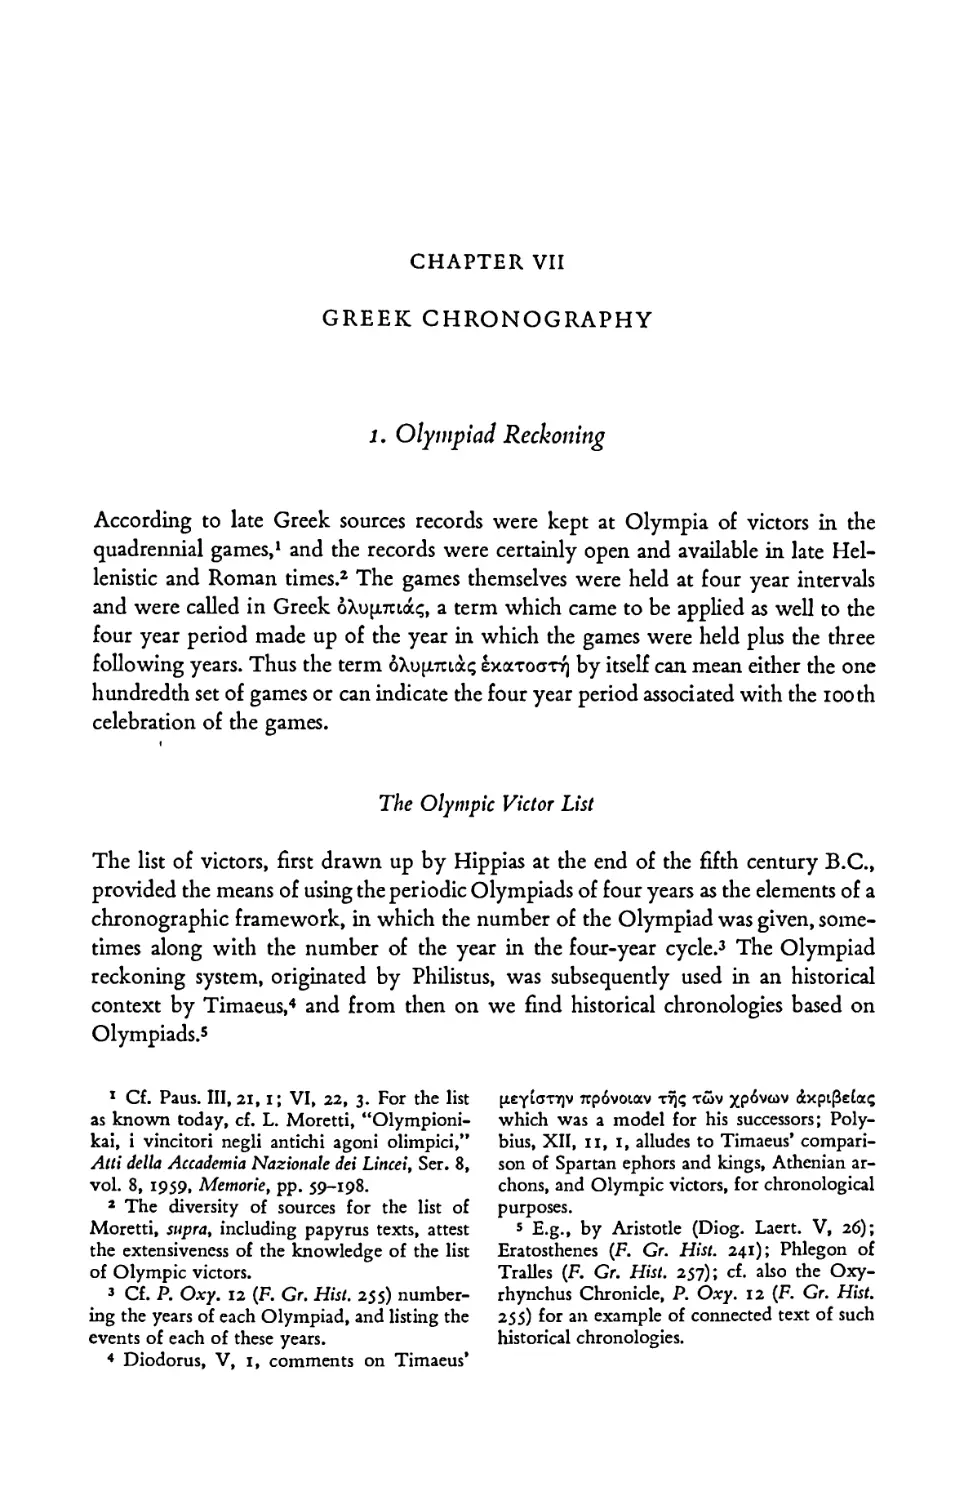 CHAPTER VII. GREEK CHRONOGRAPHY